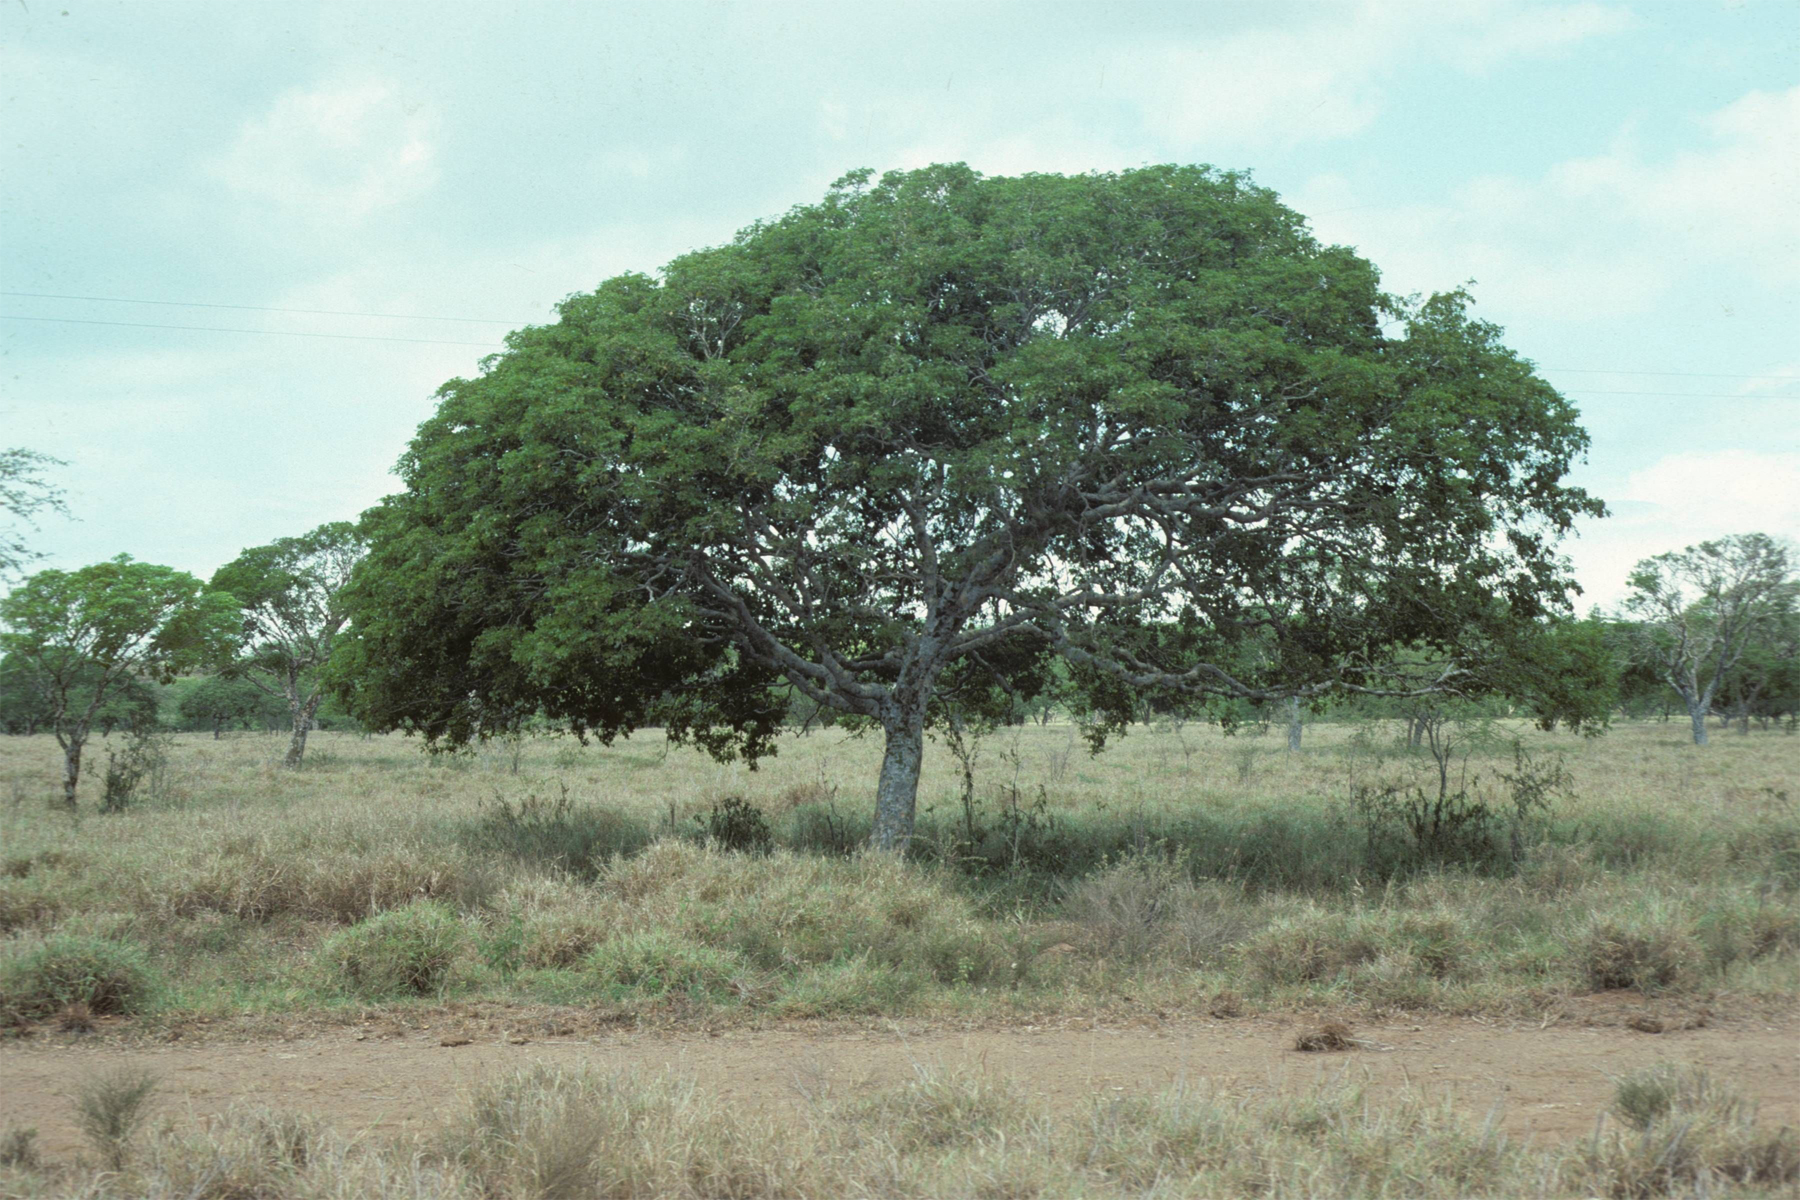 Guaiacum-tree